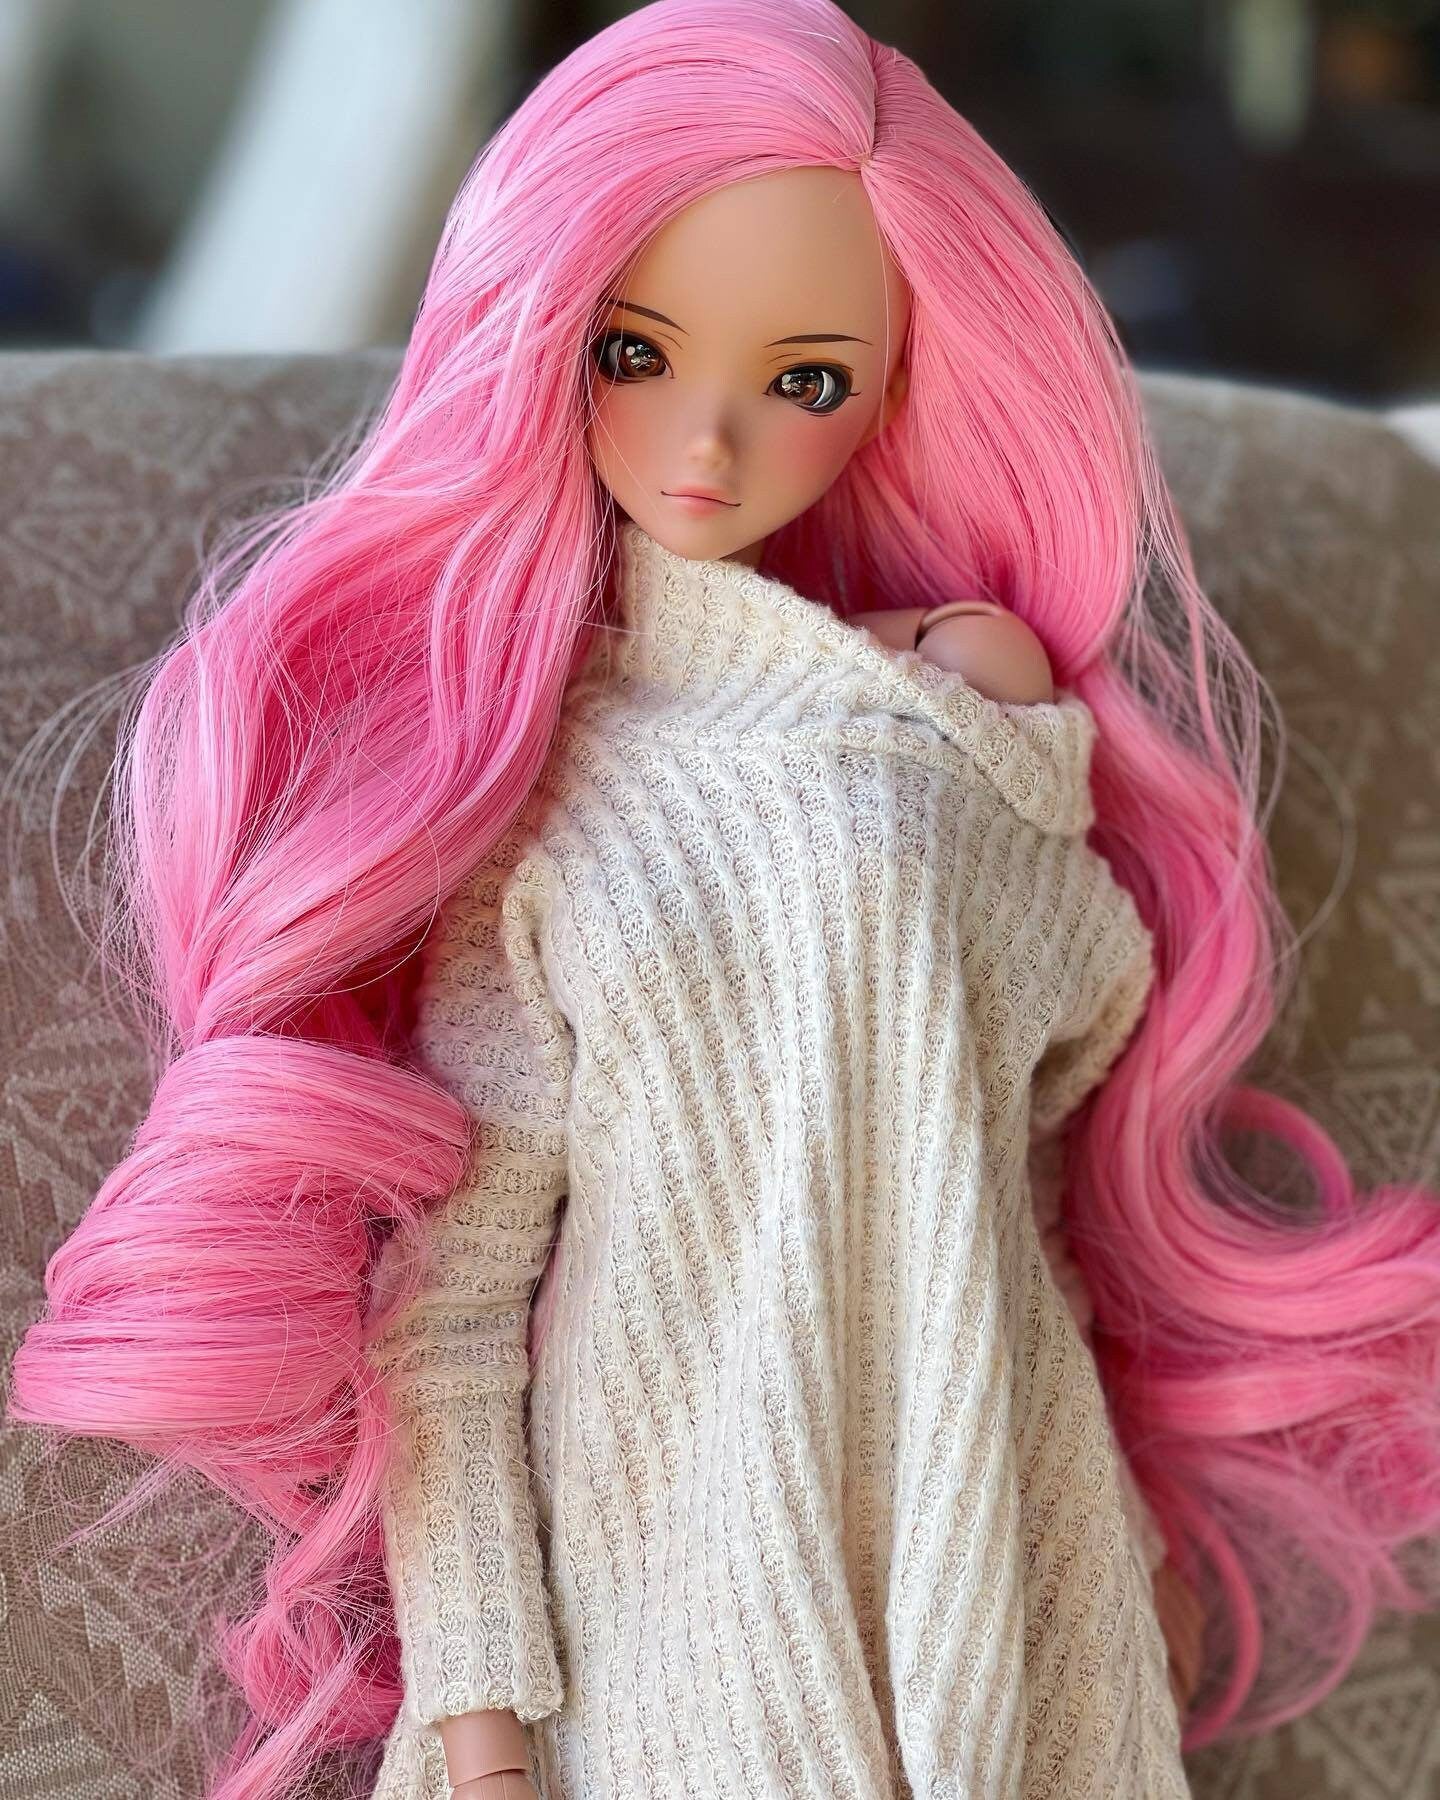 Custom doll WIG for Smart Dolls- Heat Safe - Tangle Resistant- 8.5" head size of Bjd, SD, Dollfie Dream dolls Bubblegum Pink